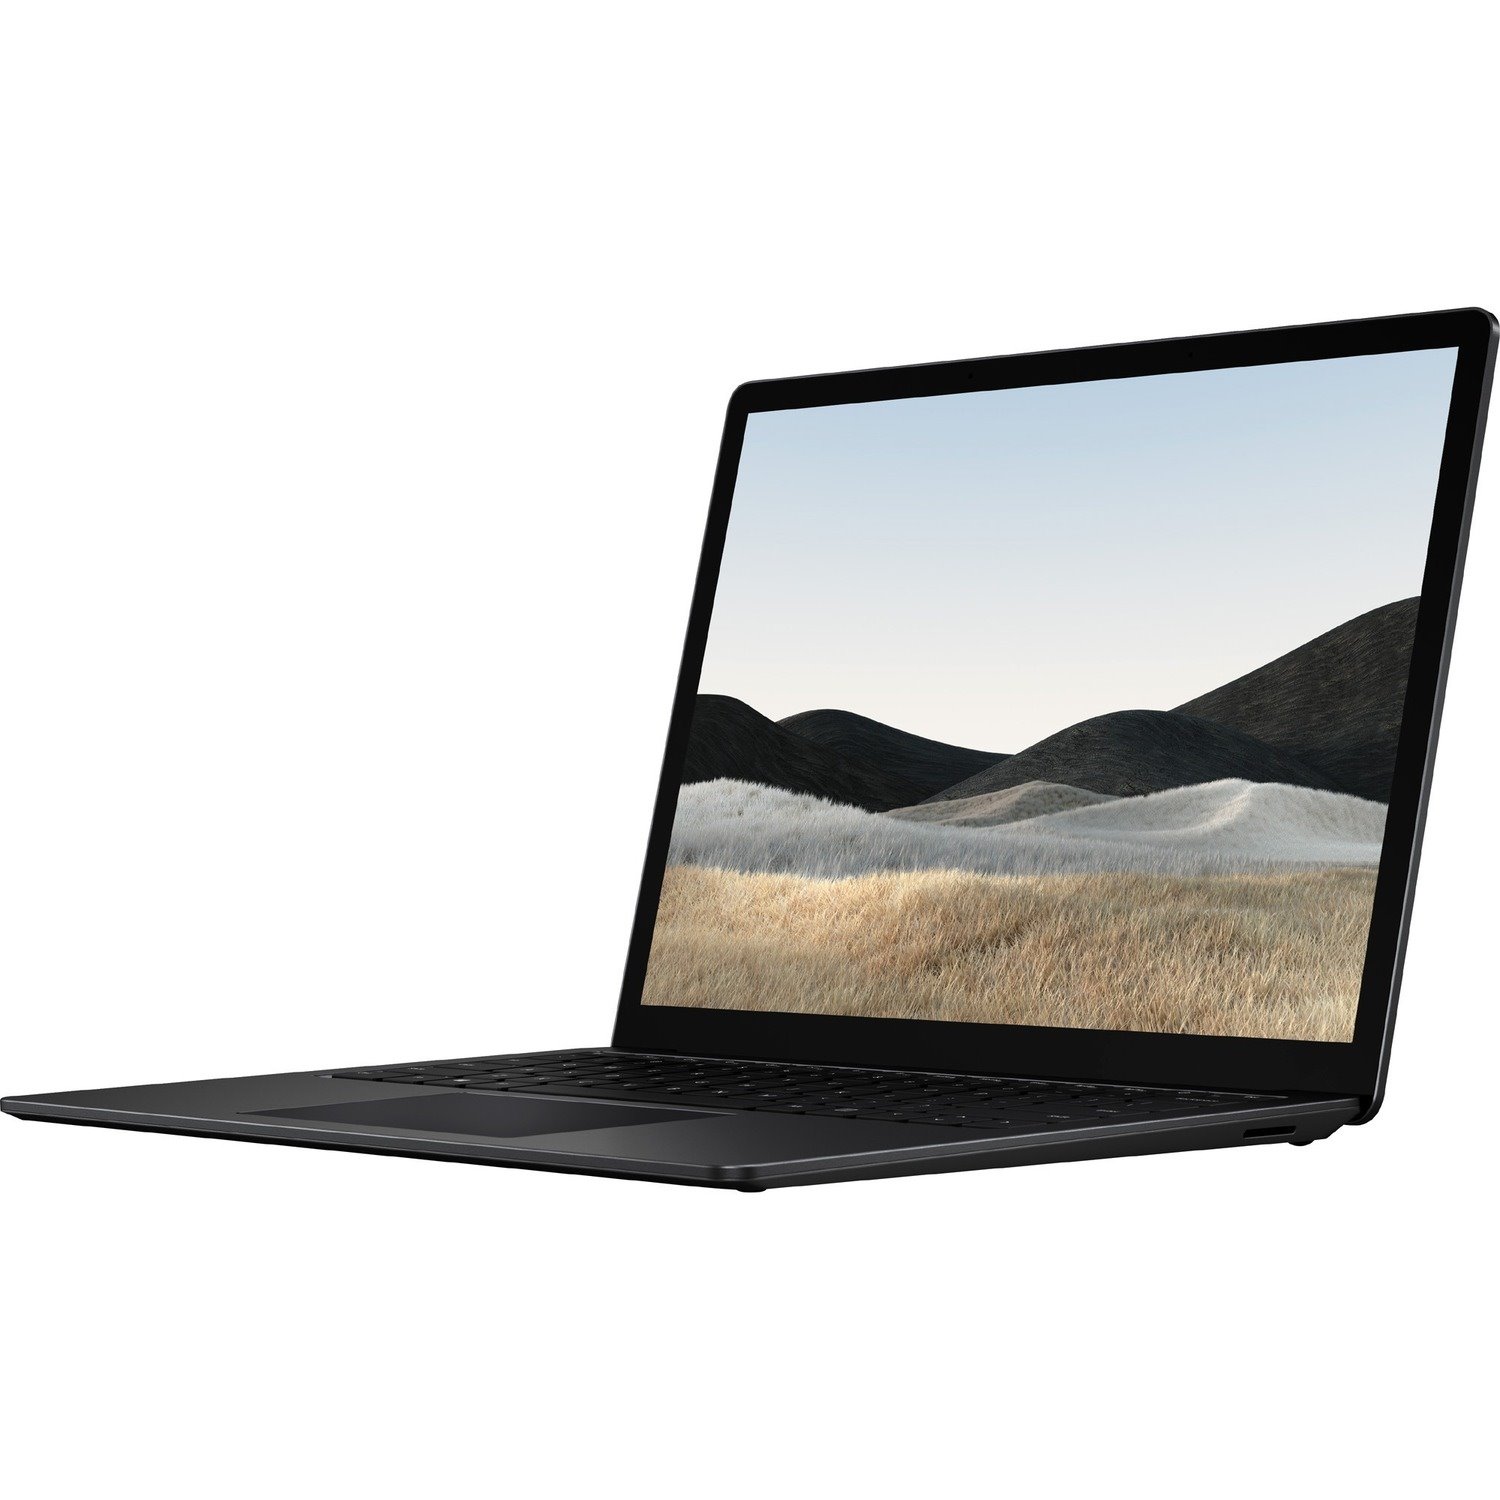 Microsoft Surface Laptop 4 13.5" Touchscreen Notebook - 2256 x 1504 - Intel Core i7 - 16 GB Total RAM - 512 GB SSD - Matte Black